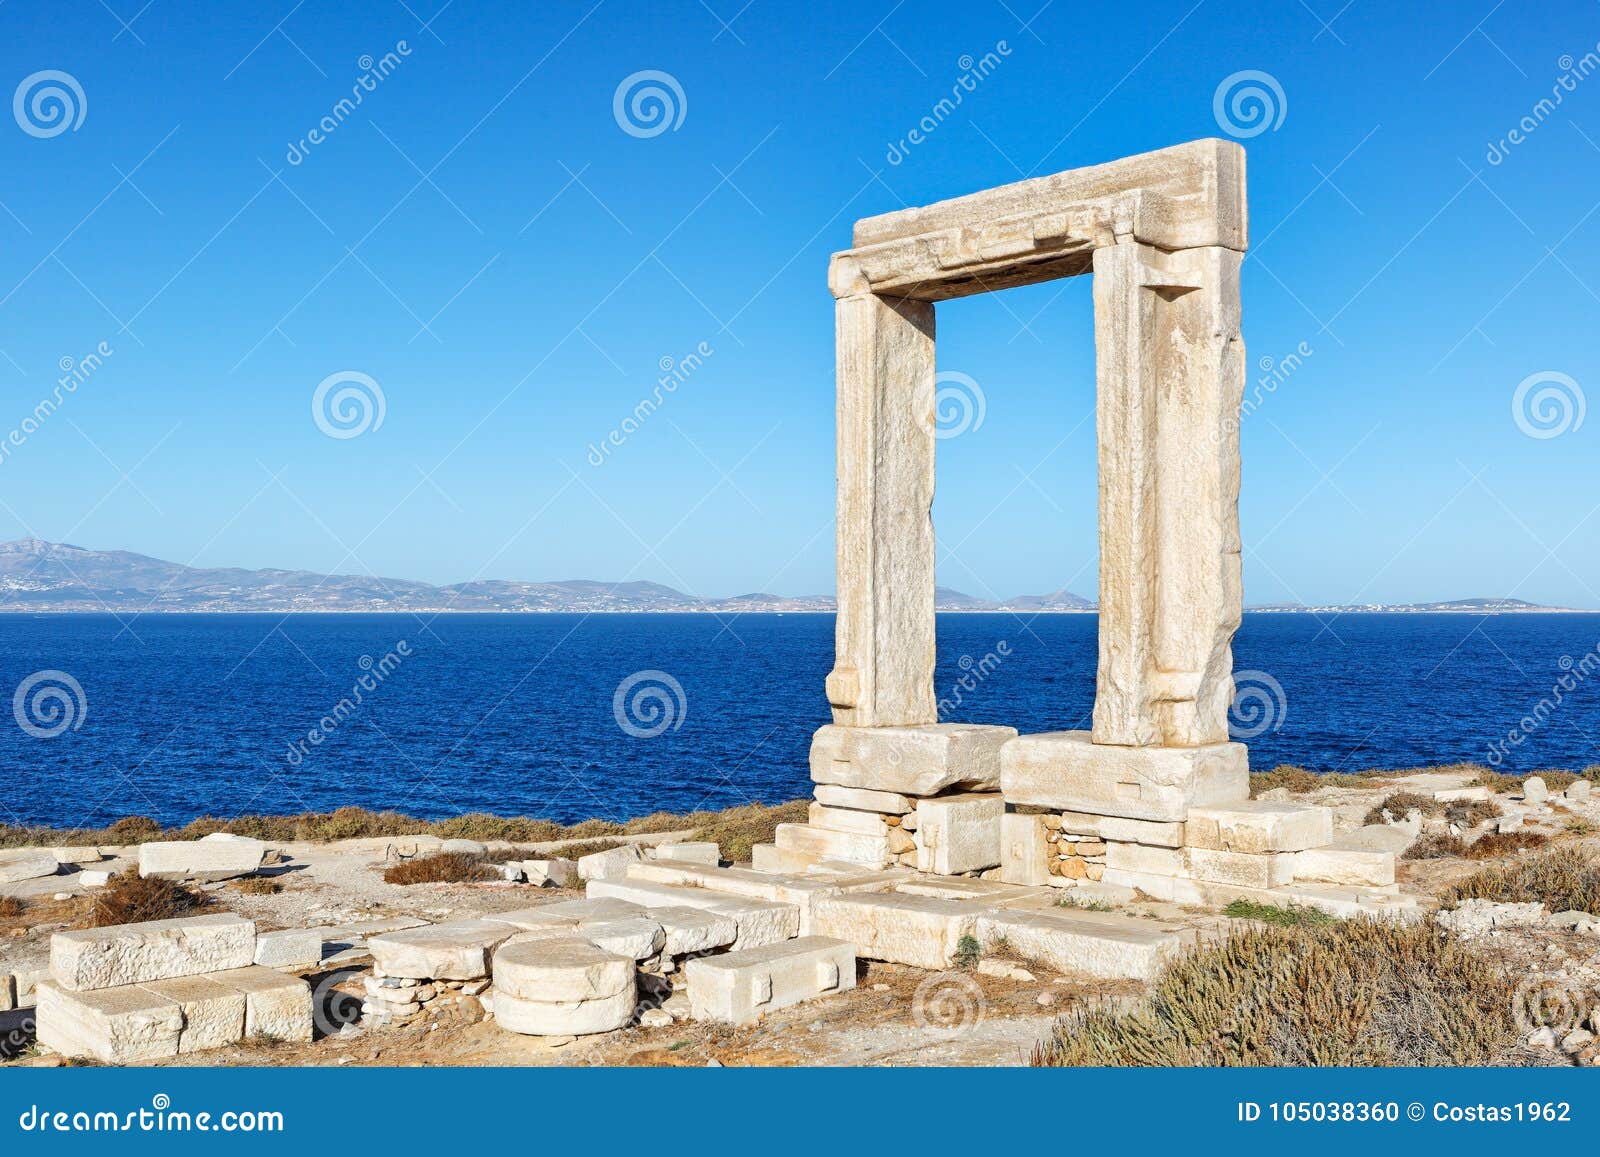 portara in chora of naxos island, greece